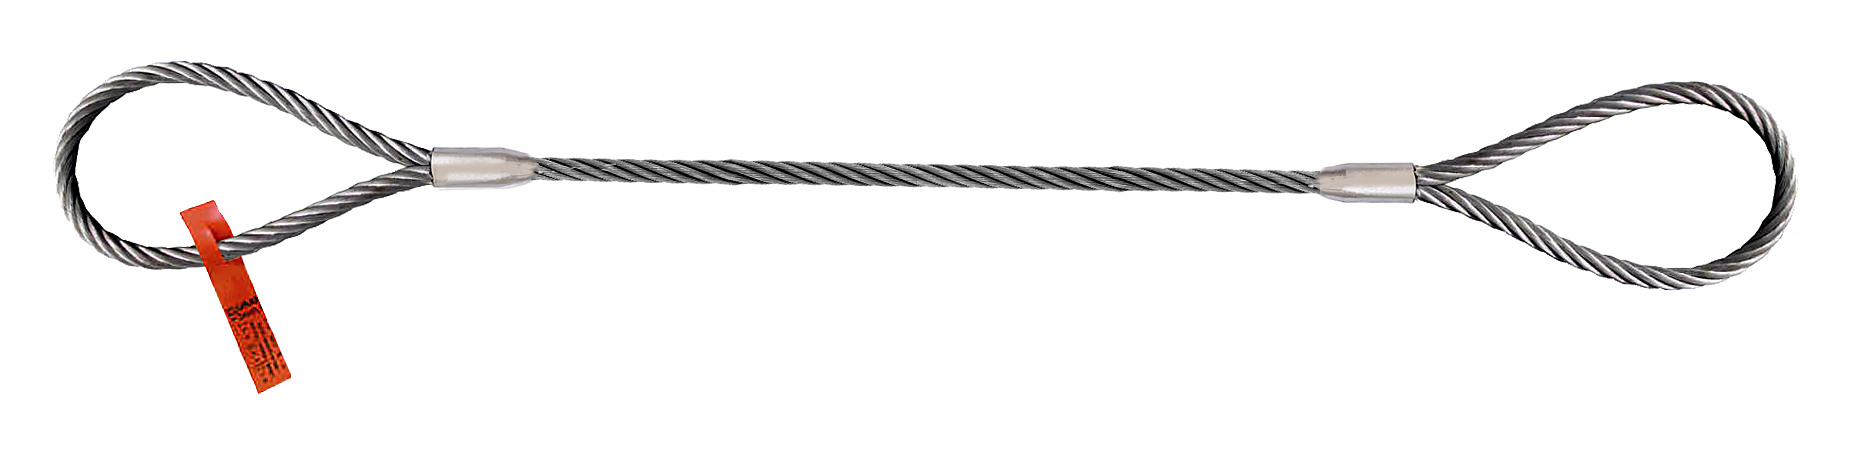 Liftall 34EEX17 Wire Rope Sling Eye and Eye 3/4 x 17 6 x 19 Domestic 